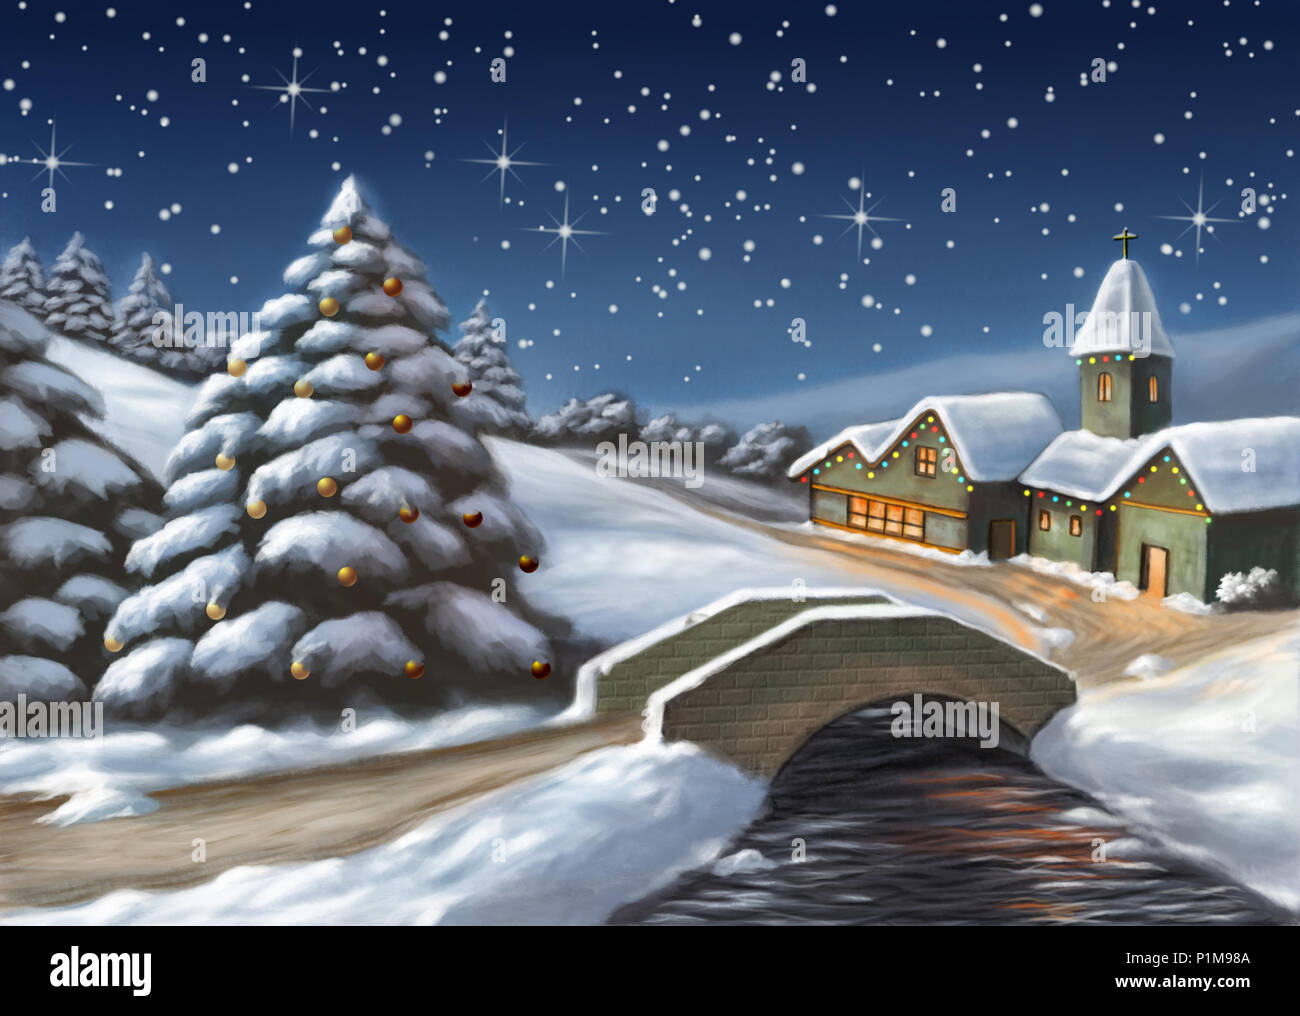 Enchanted Christmas landscape. Digital illustration. Stock Photo